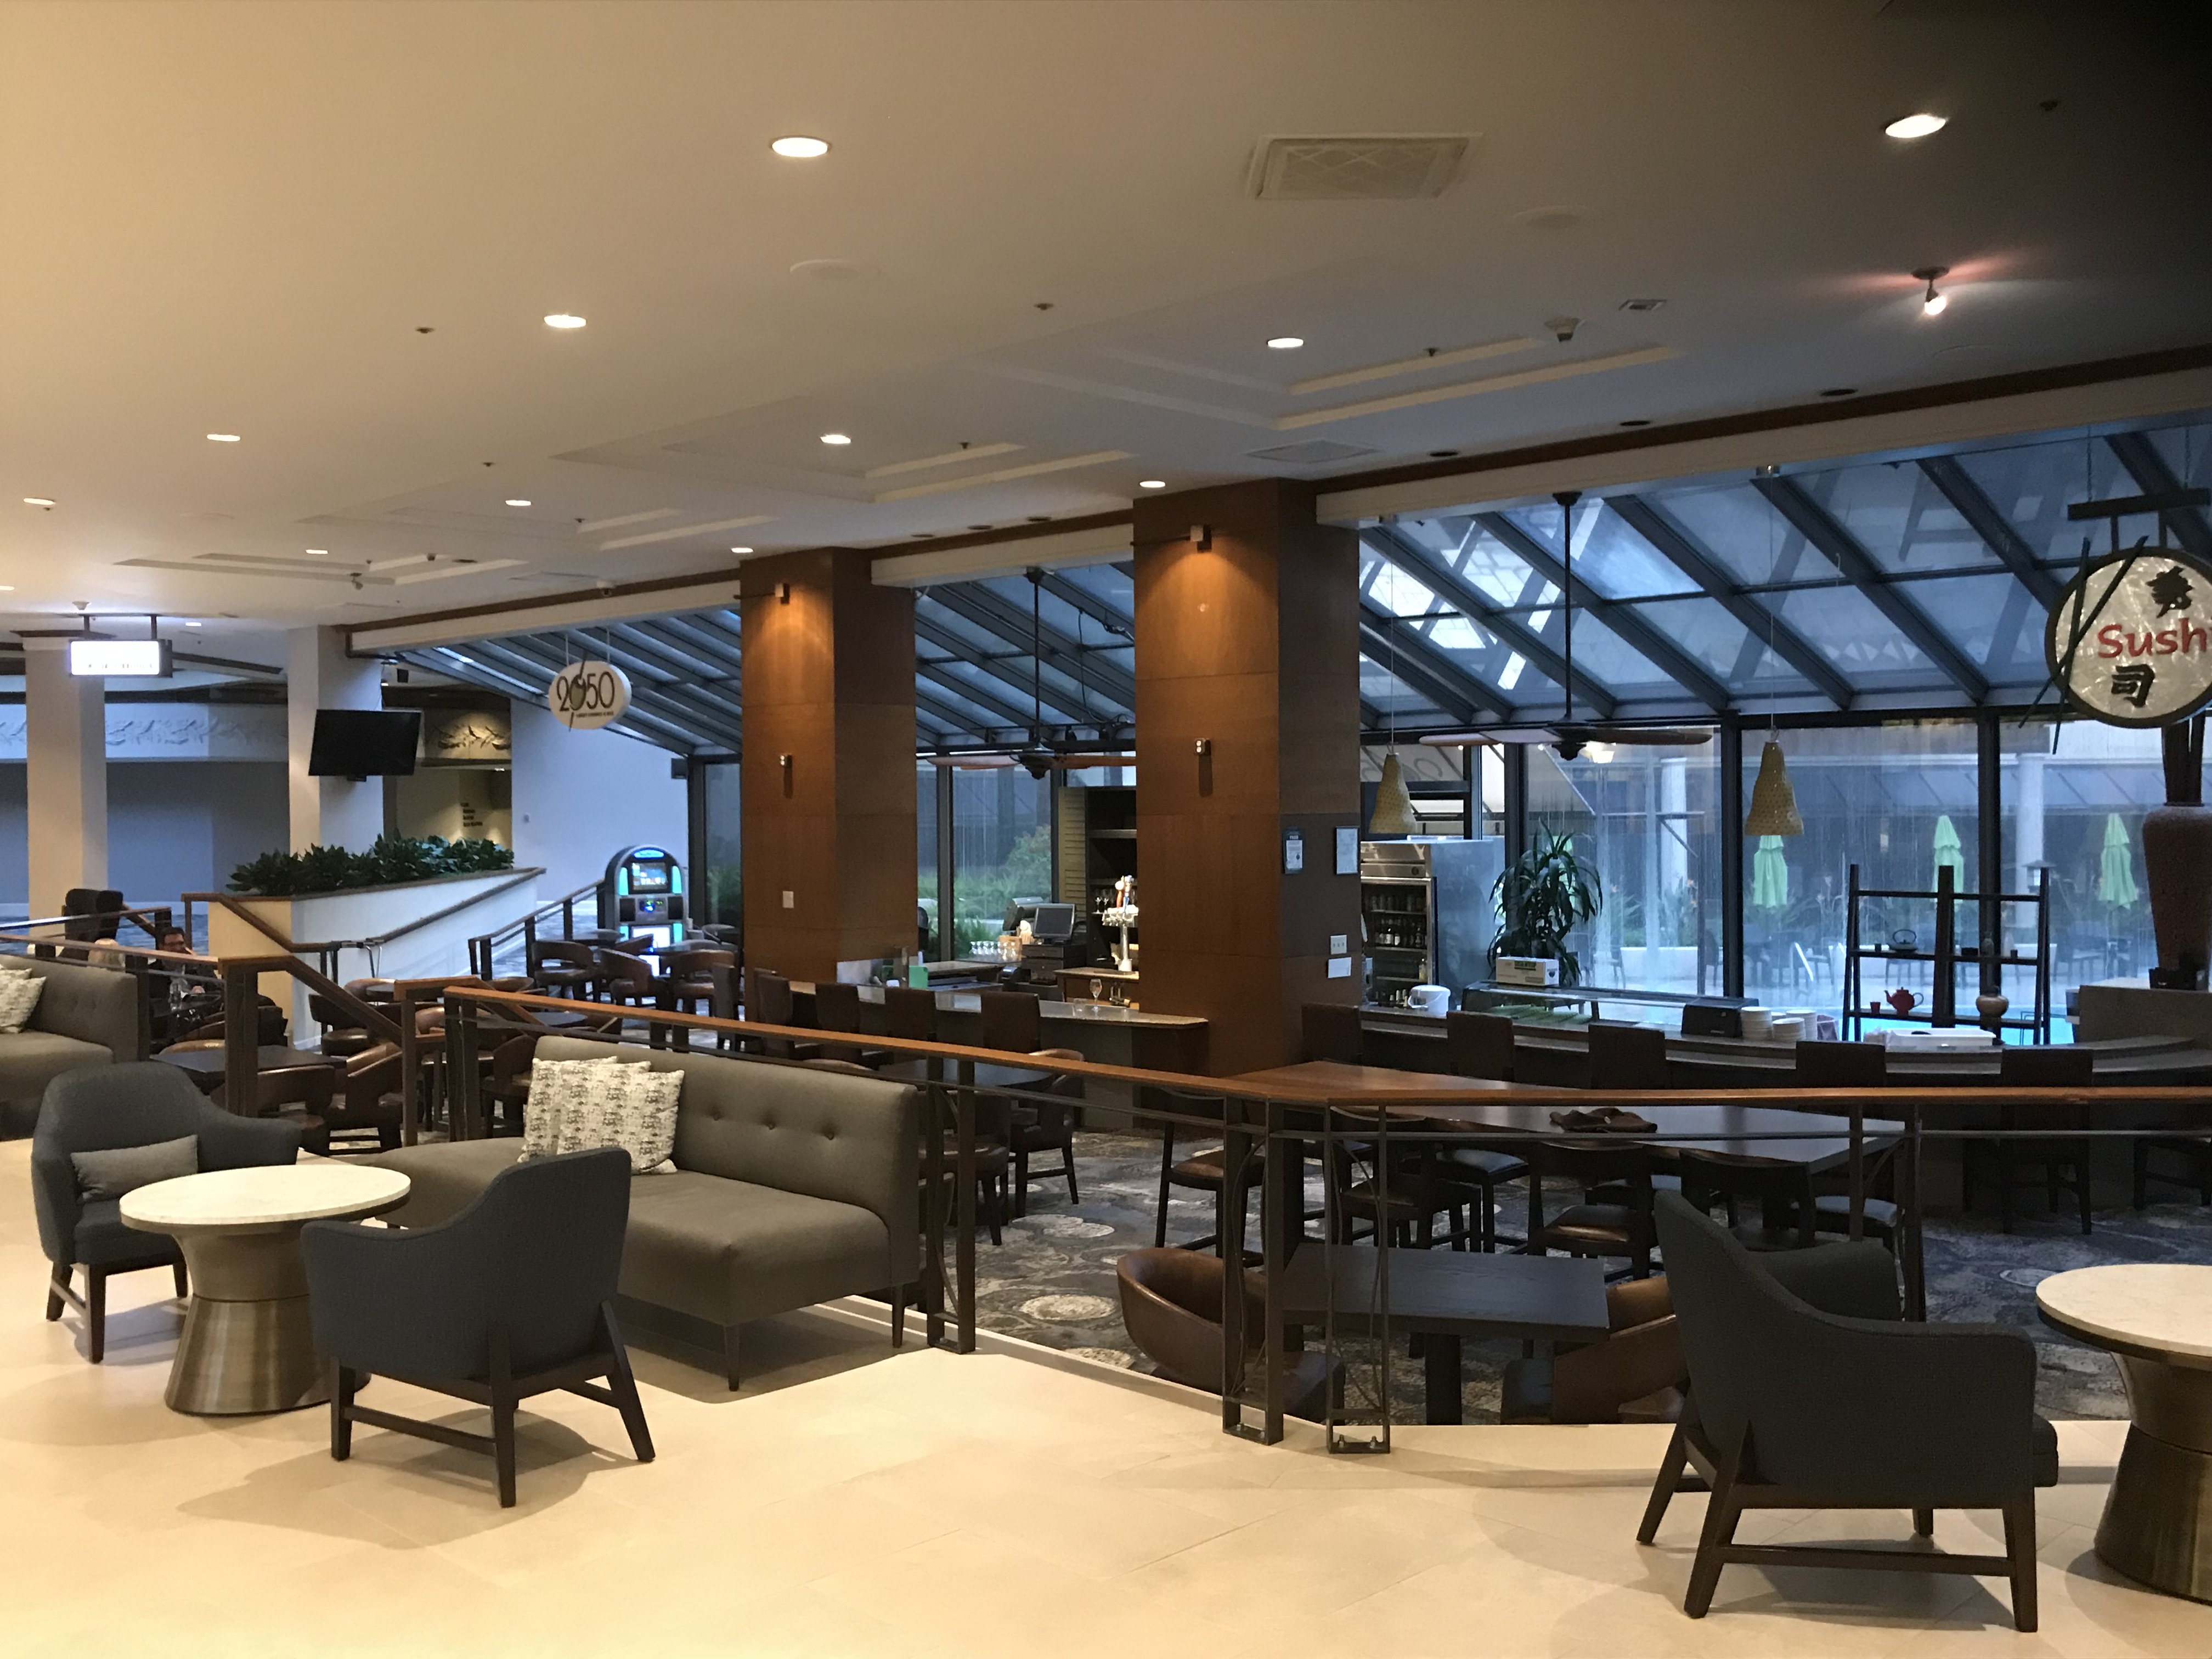 Doubletree by Hilton Lobby Lounge